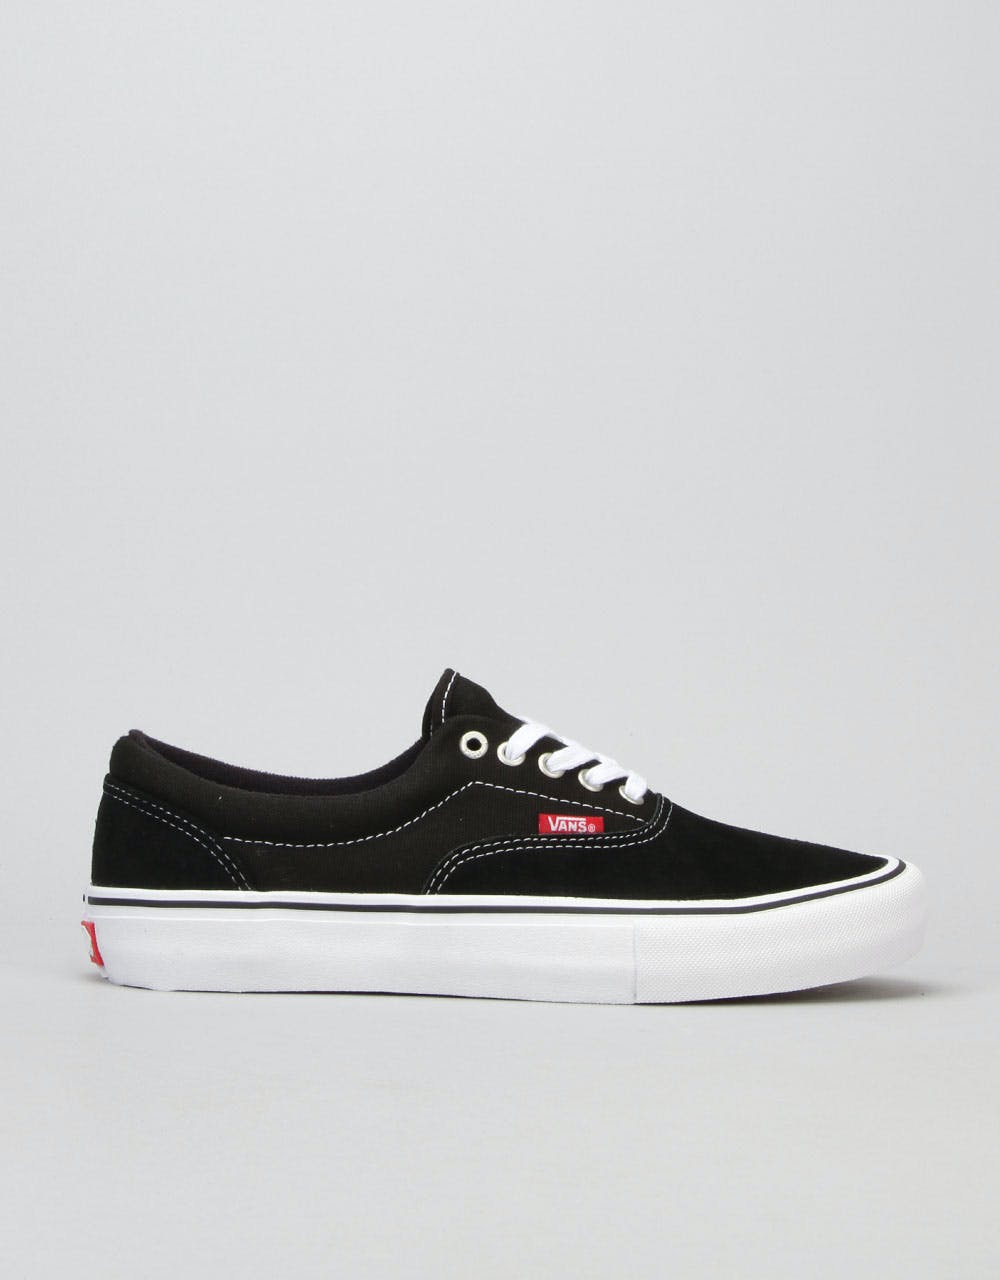 Vans Era Pro Skate Shoes - Black/White 